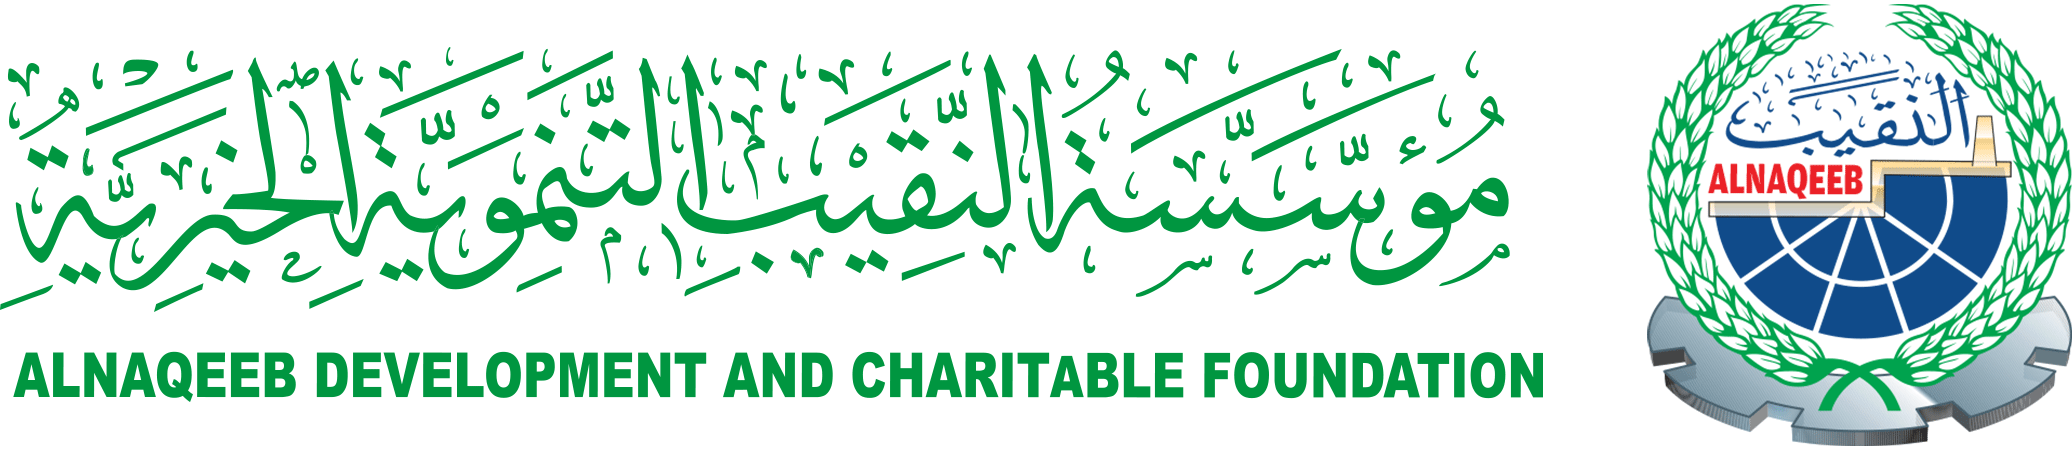 Al-Naqeeb Development Charity Foundation